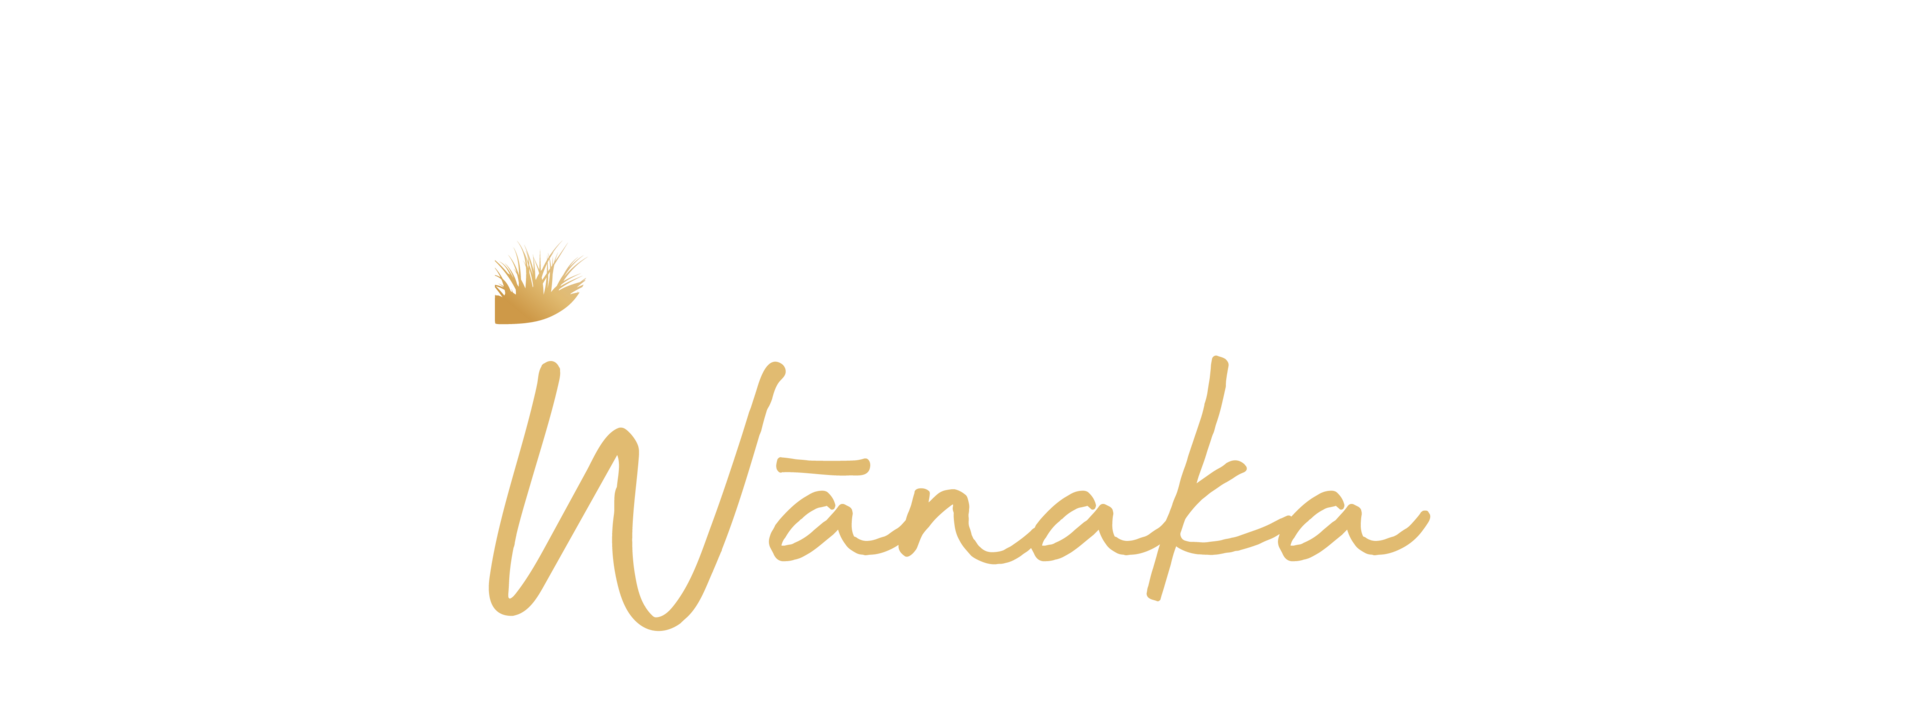 1Ridgeline Wanaka_Logo_N_Online 201022 (2).png